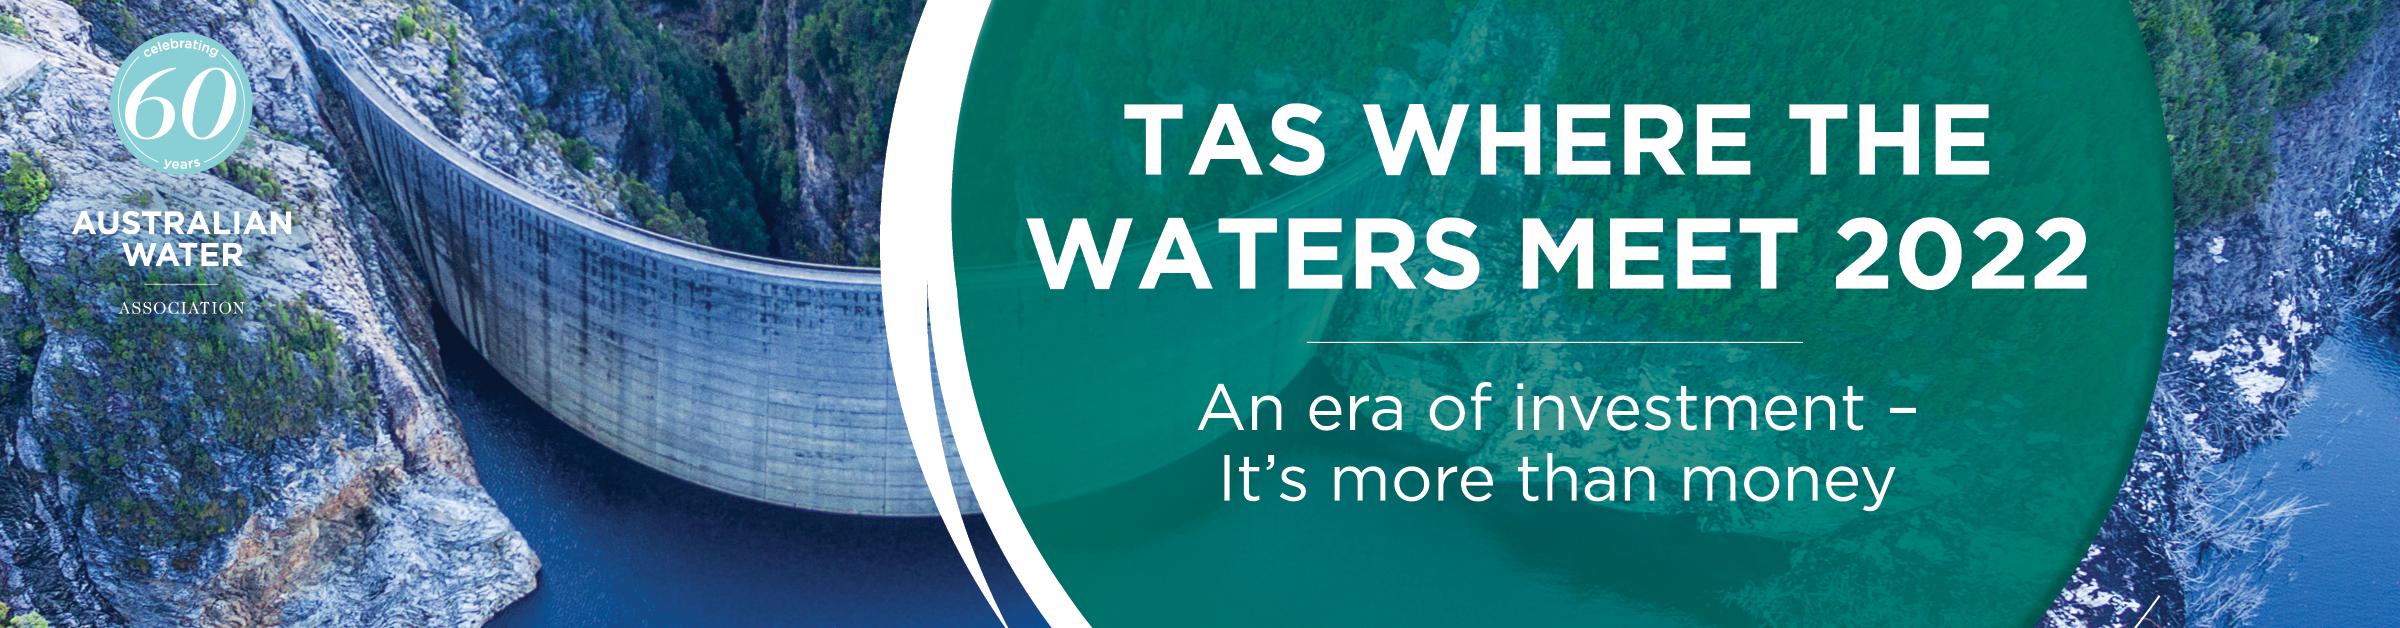 TAS Where the waters meet 2022_HubSpot Event Banner 1200x314px